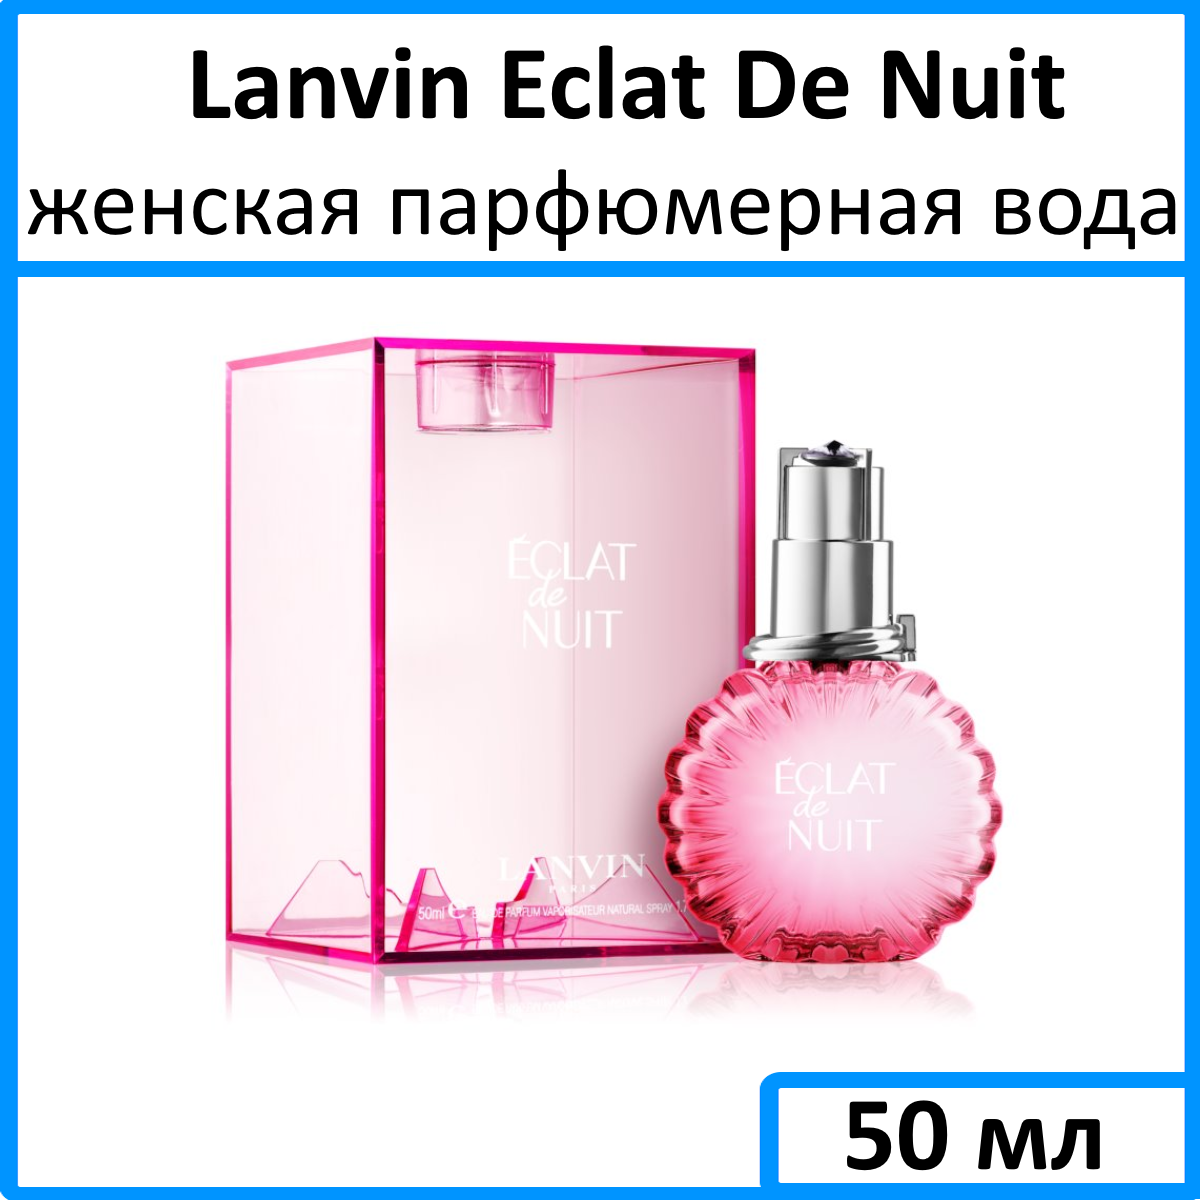 Lanvin Eclat De Nuit - парфюмерная вода, 50 мл